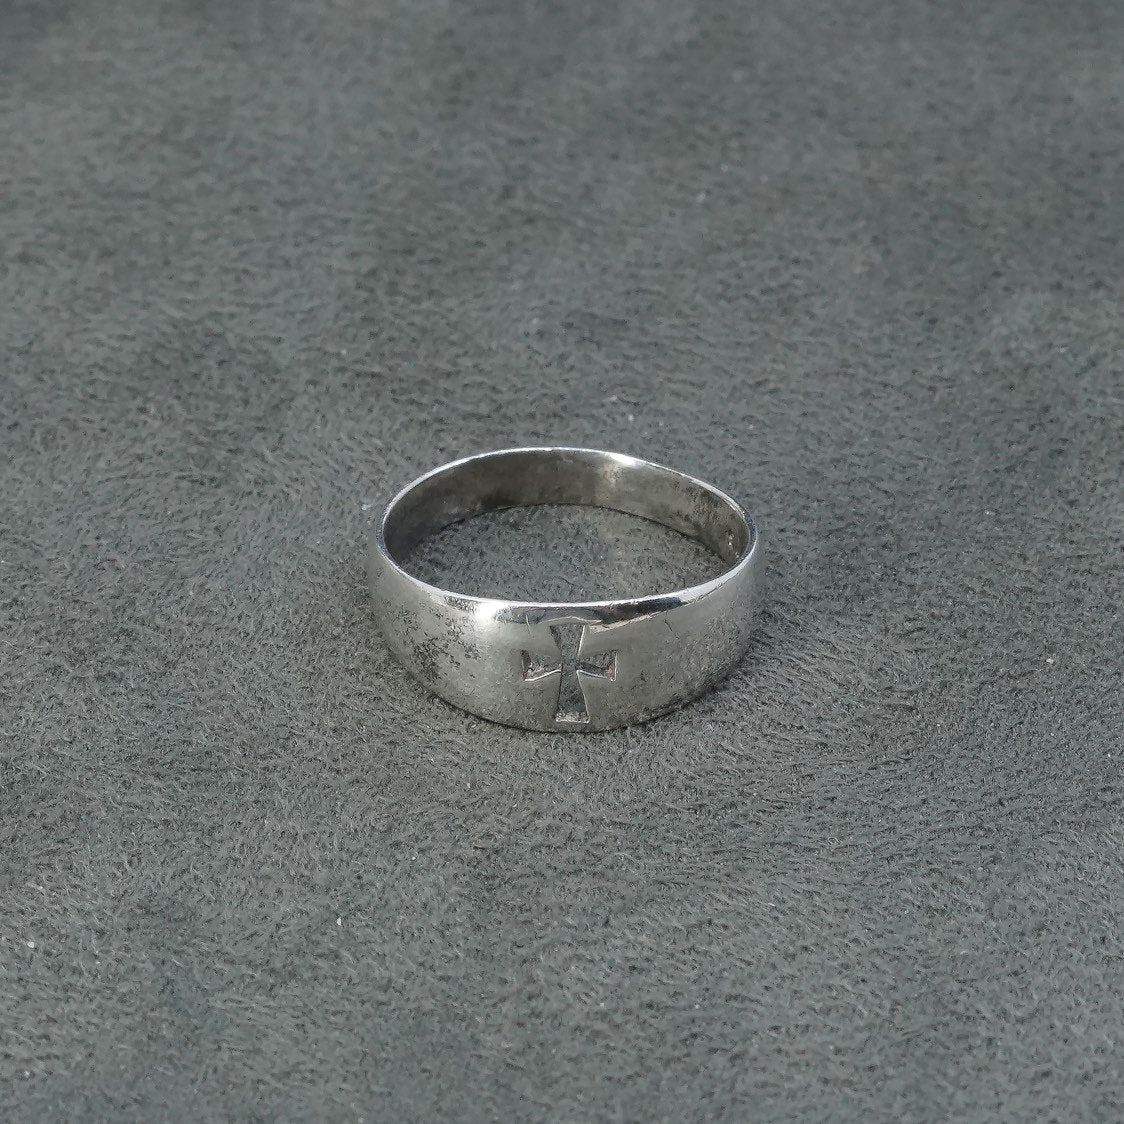 Size 6.25, vtg Sterling silver handmade ring, 925 band w/ cross